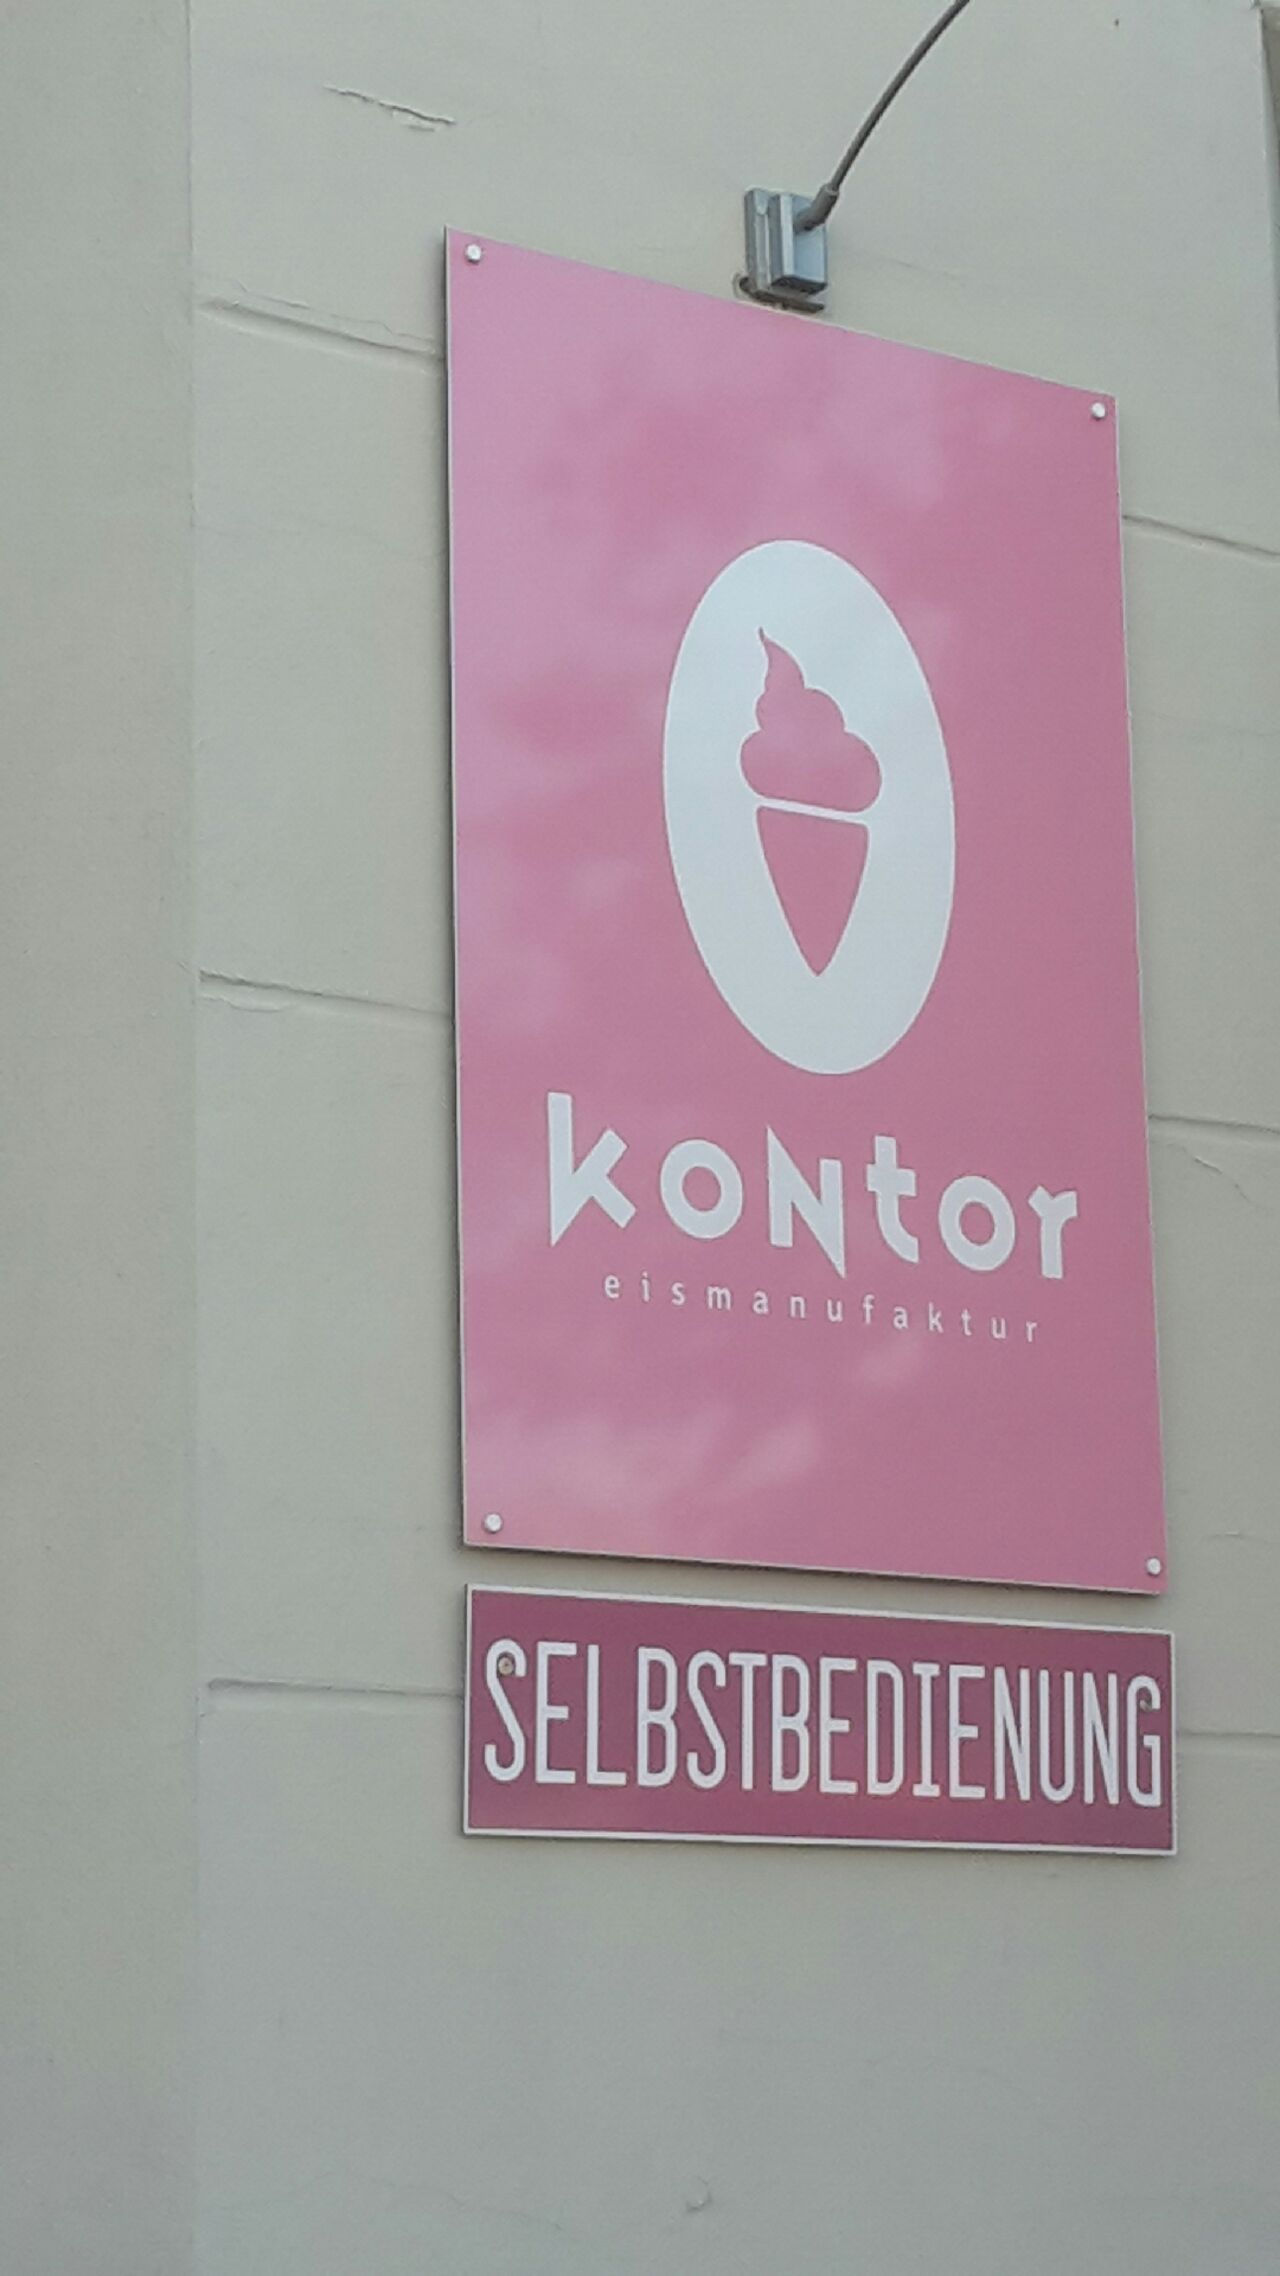 A photo of Kontor